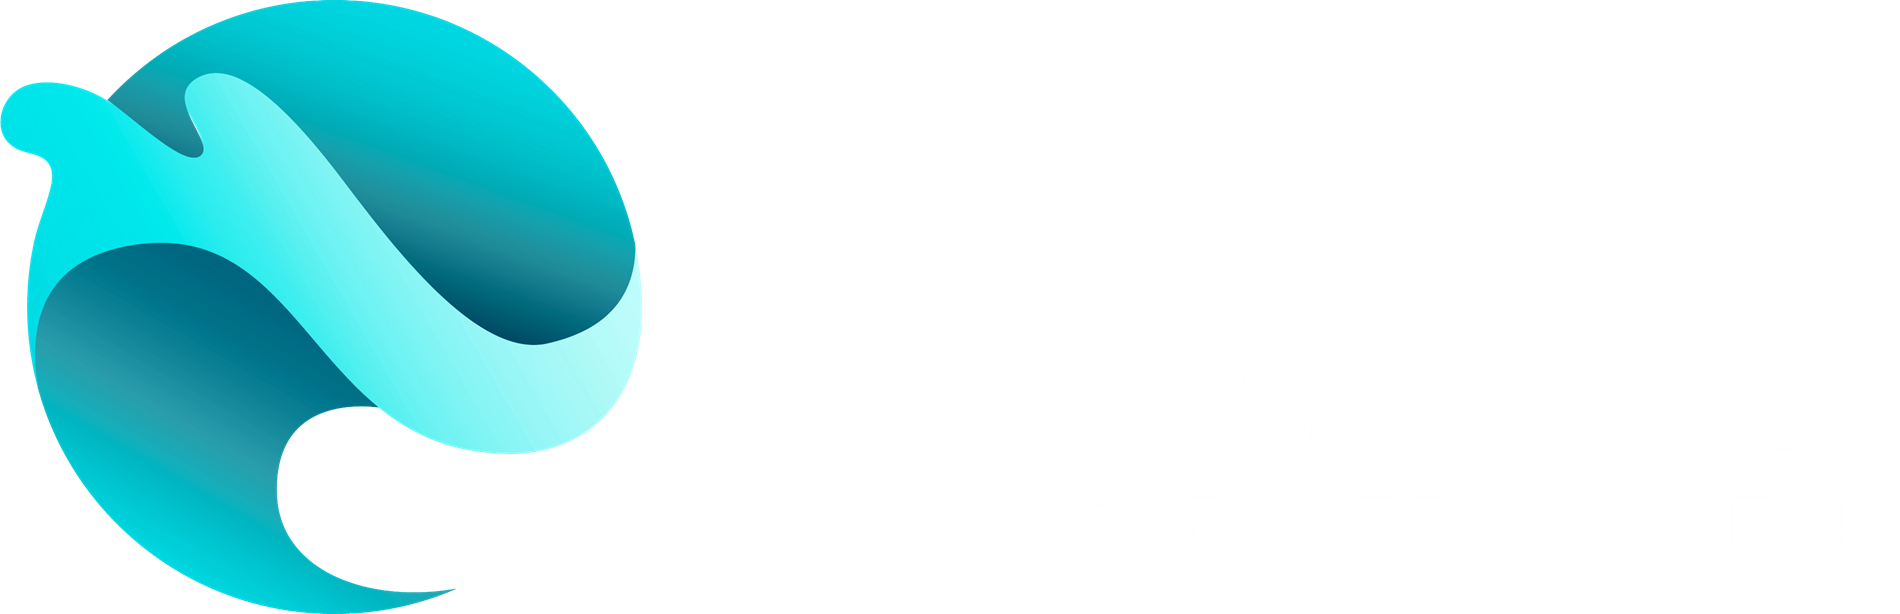 wavs logo